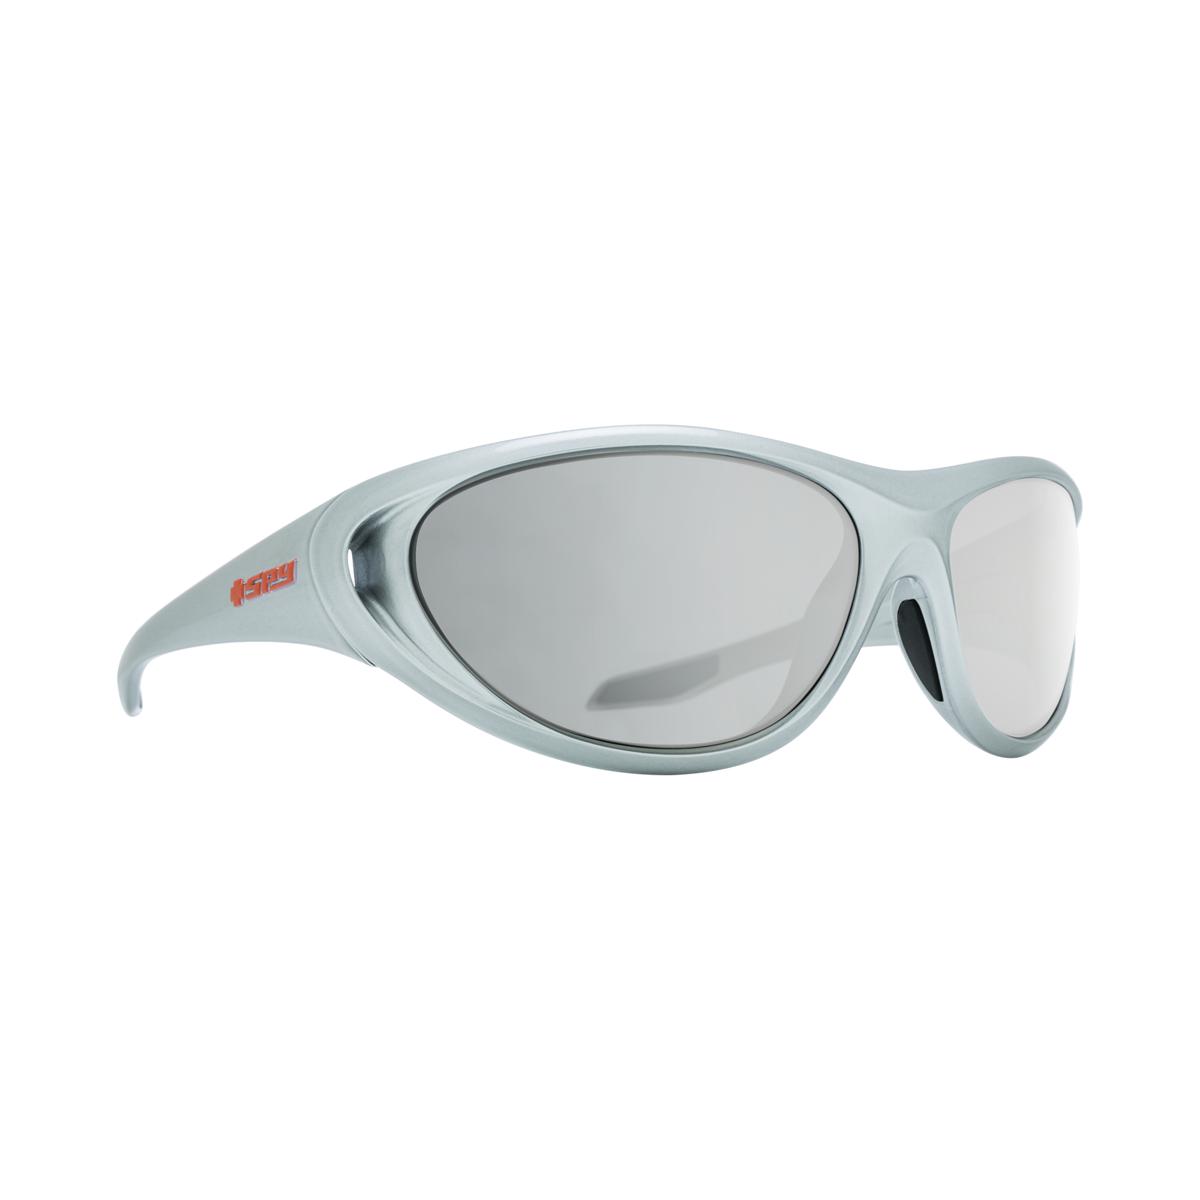 Spy Optic Scoop 2 Sunglasses